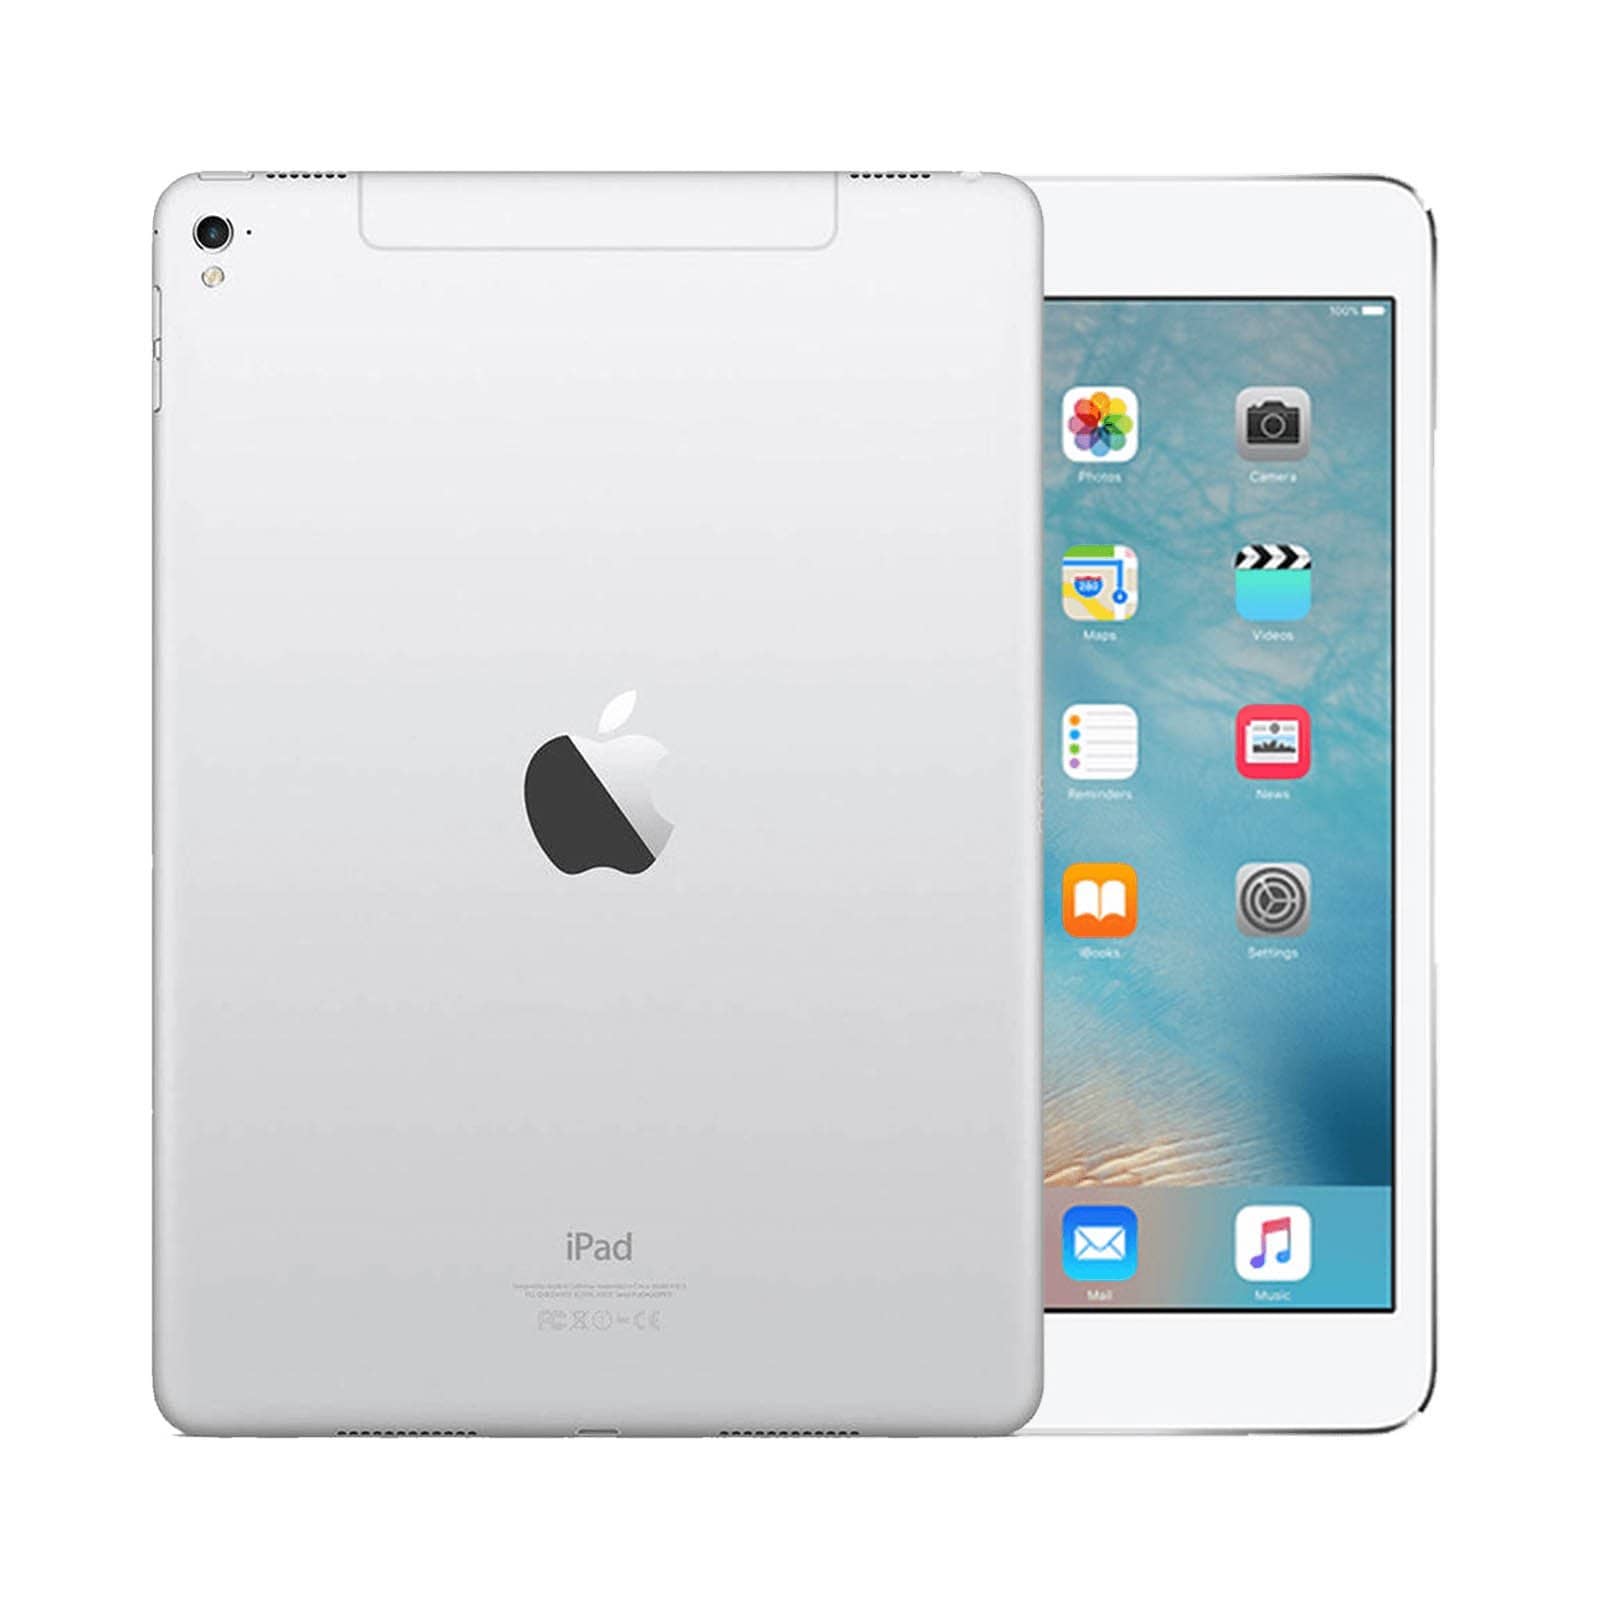 iPad Pro 9.7 Inch 32GB Silver Very Good - Unlocked 32GB Silver Very Good